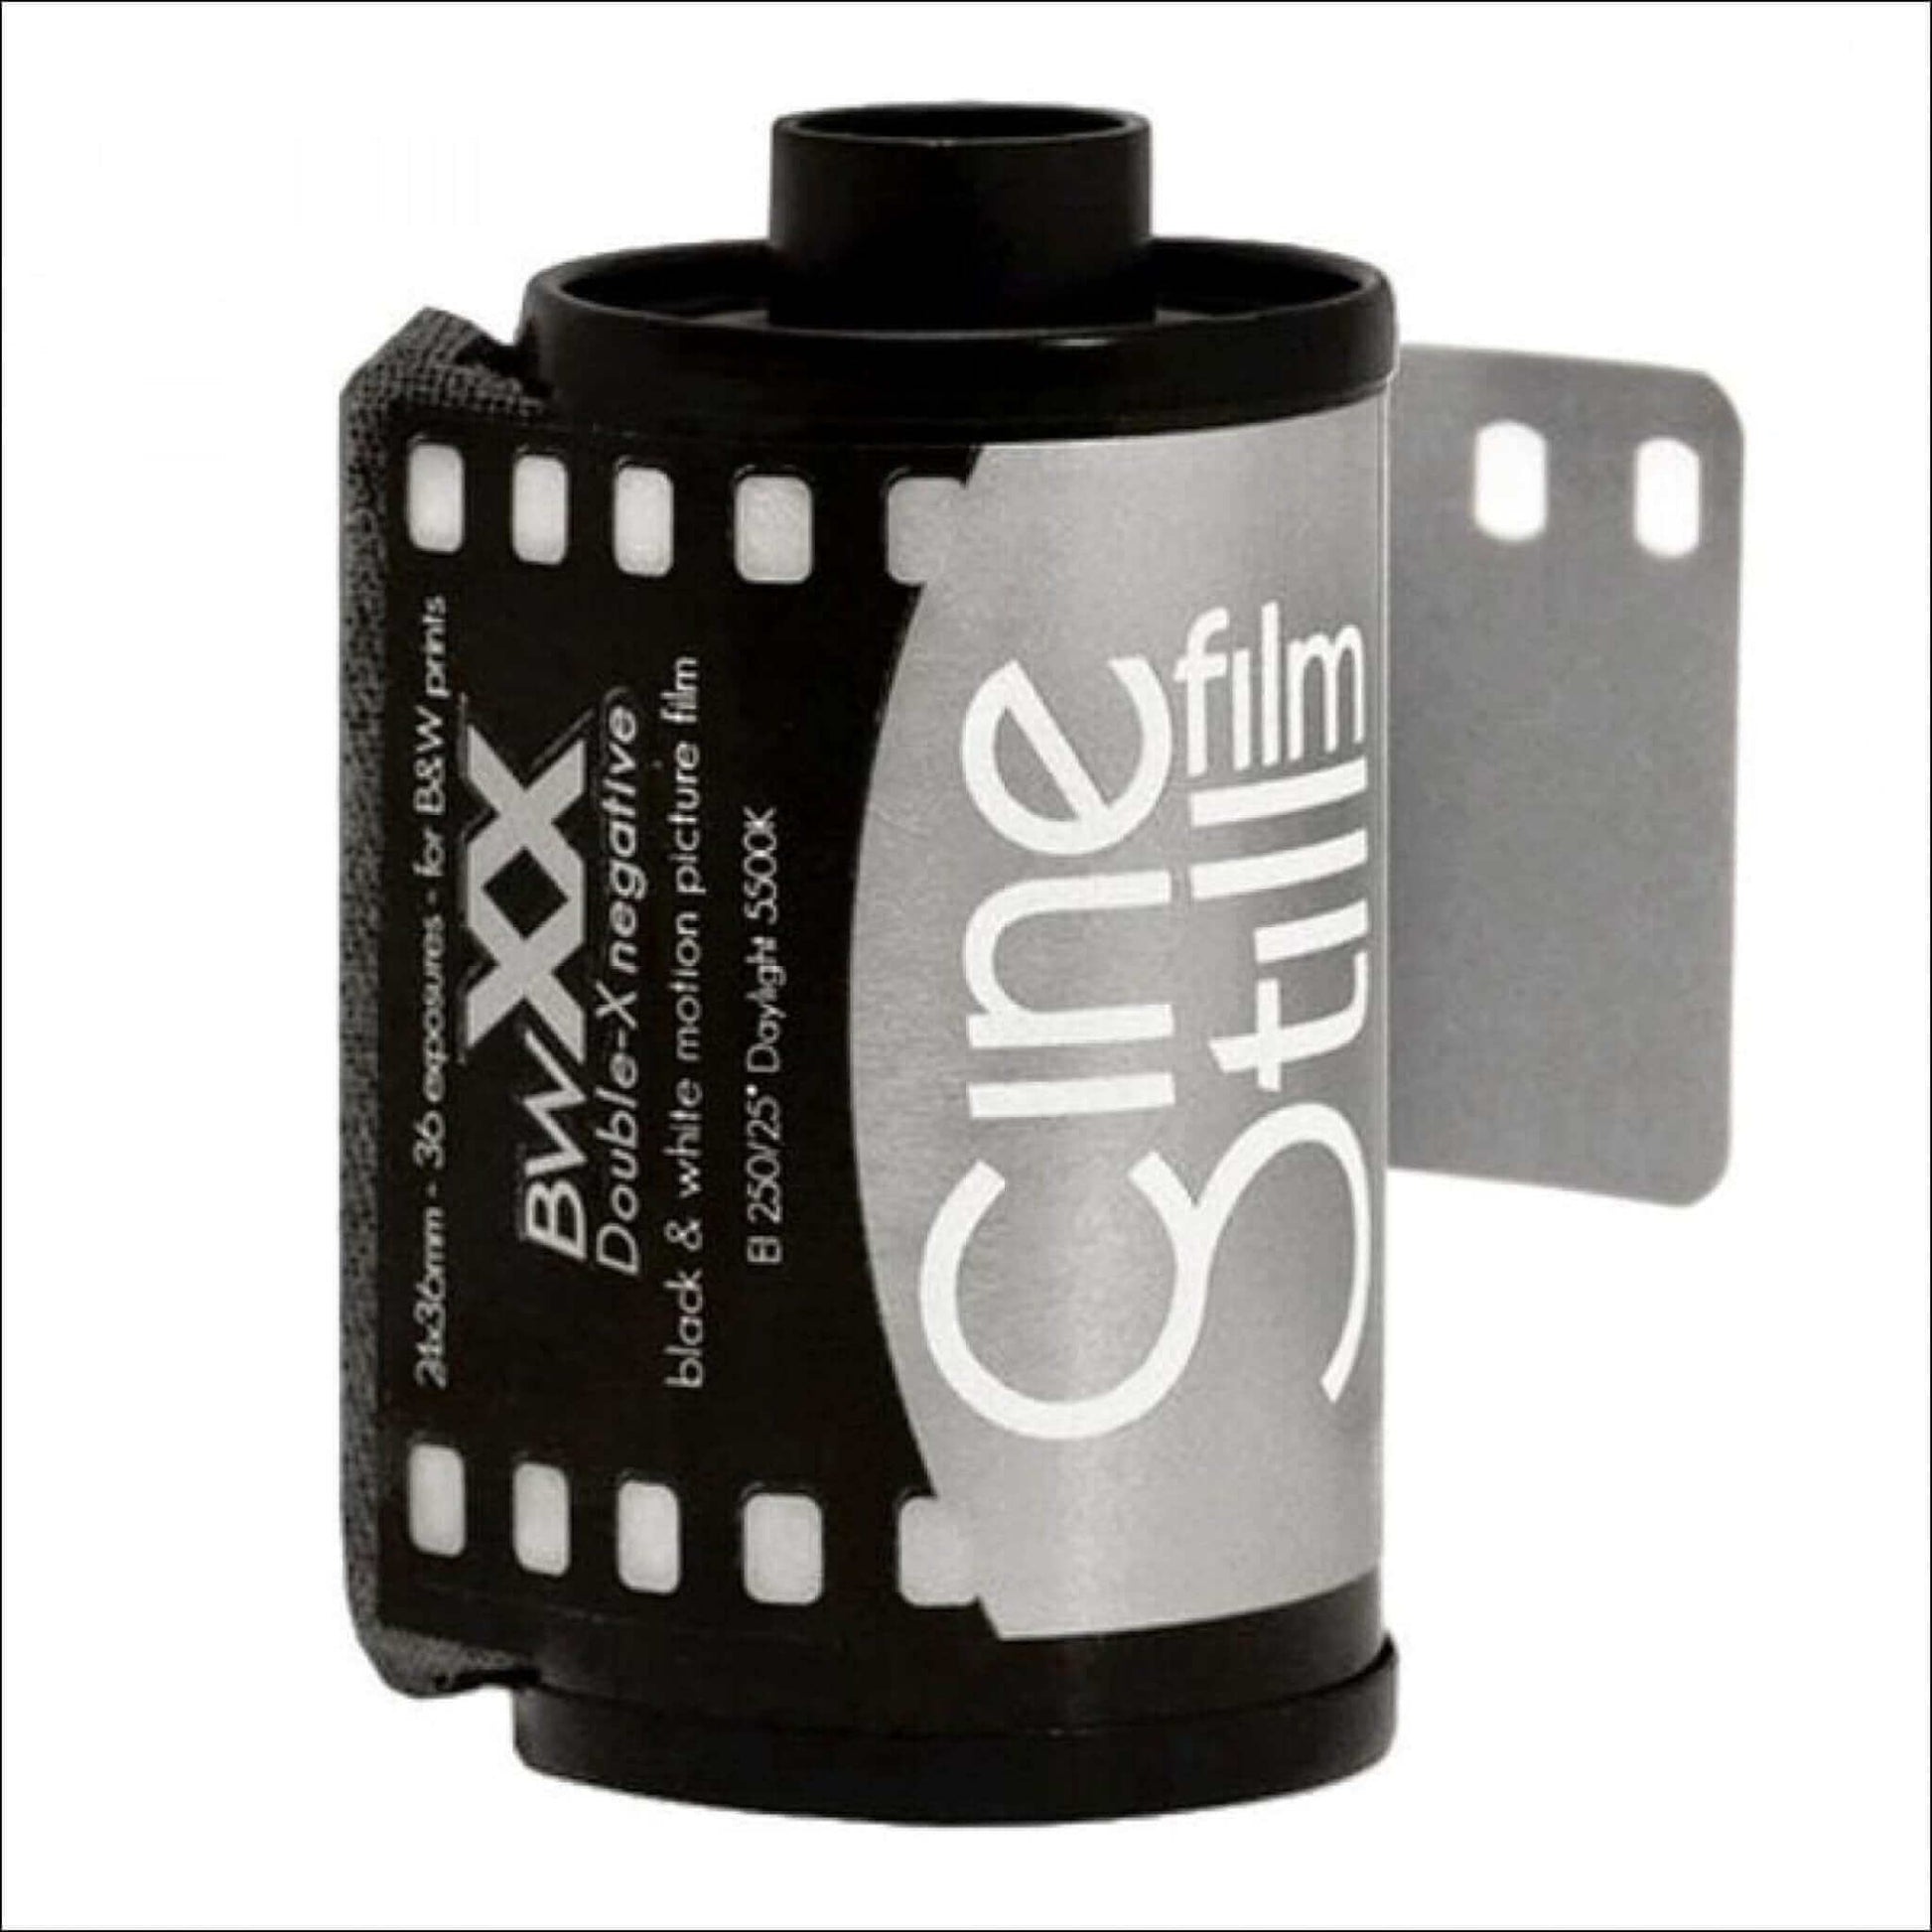 Cinestill Bwxx Double-x 250 Black & White 35mm 36 Exp Film